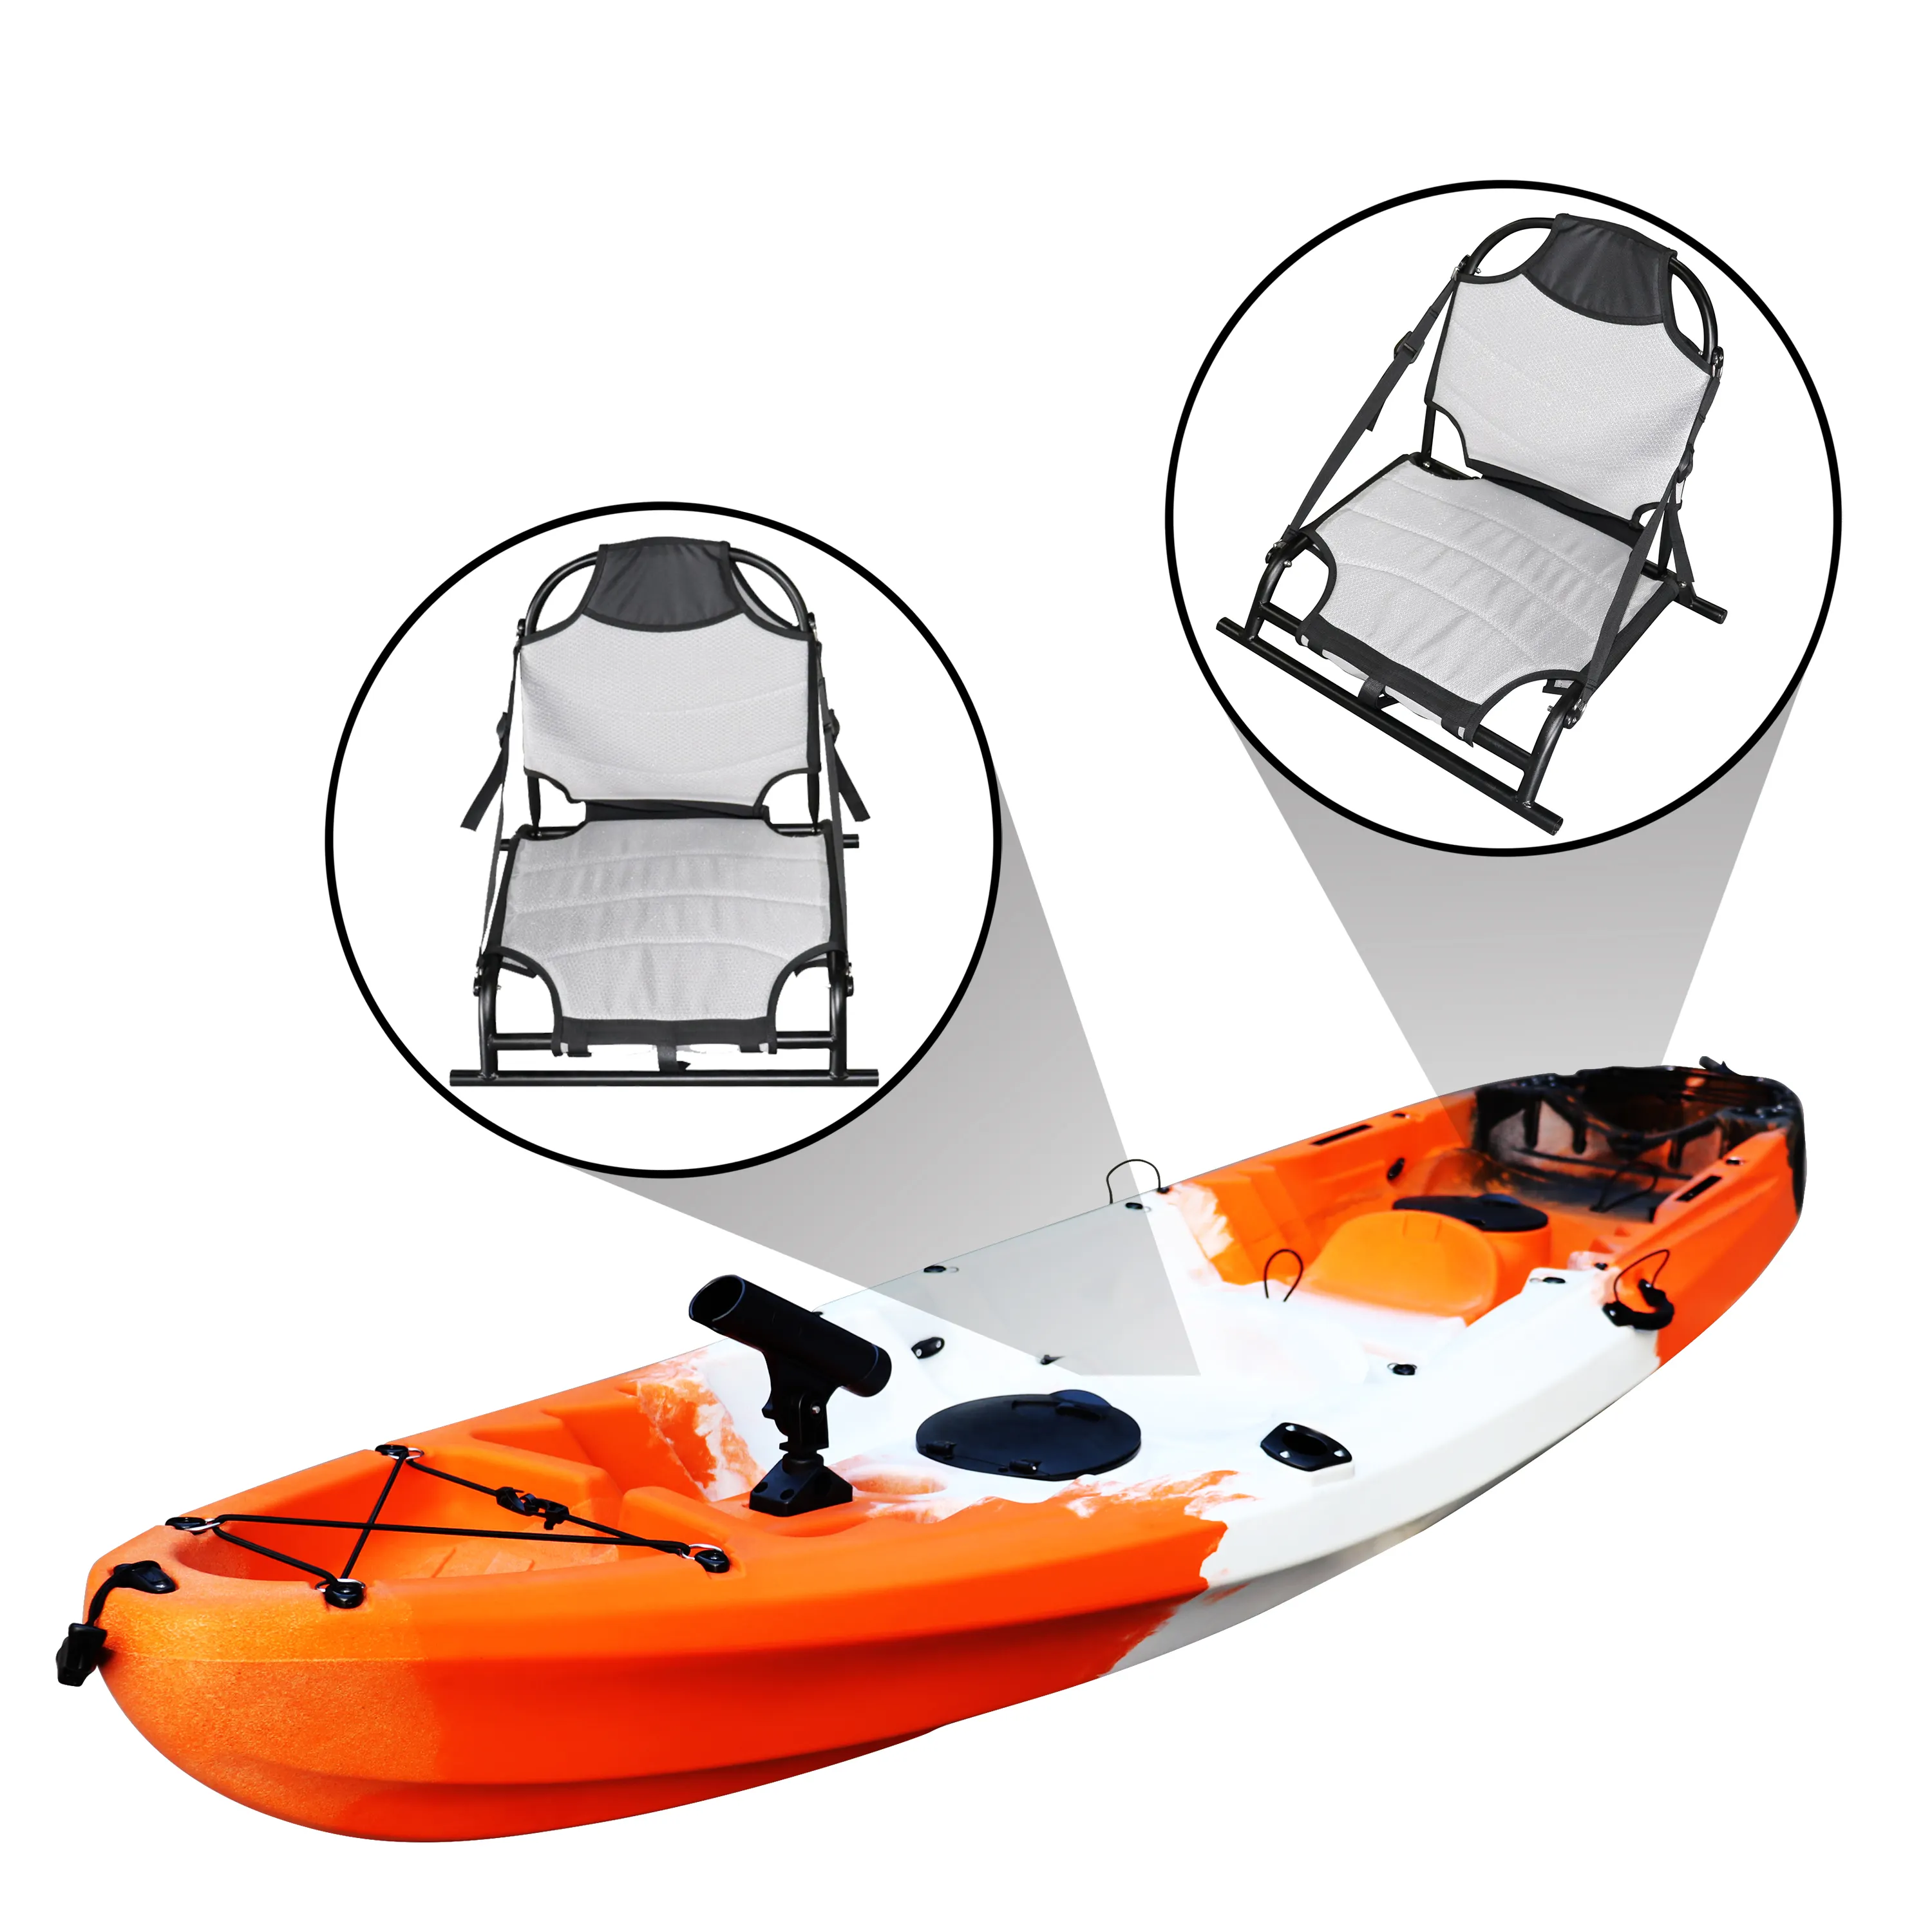 Alomejor Sedile Cuscino Portatile Antiscivolo Kayak Canoa Pesca Cuscino ergonomico Cuscino da Sedia per Pesca Campeggio 